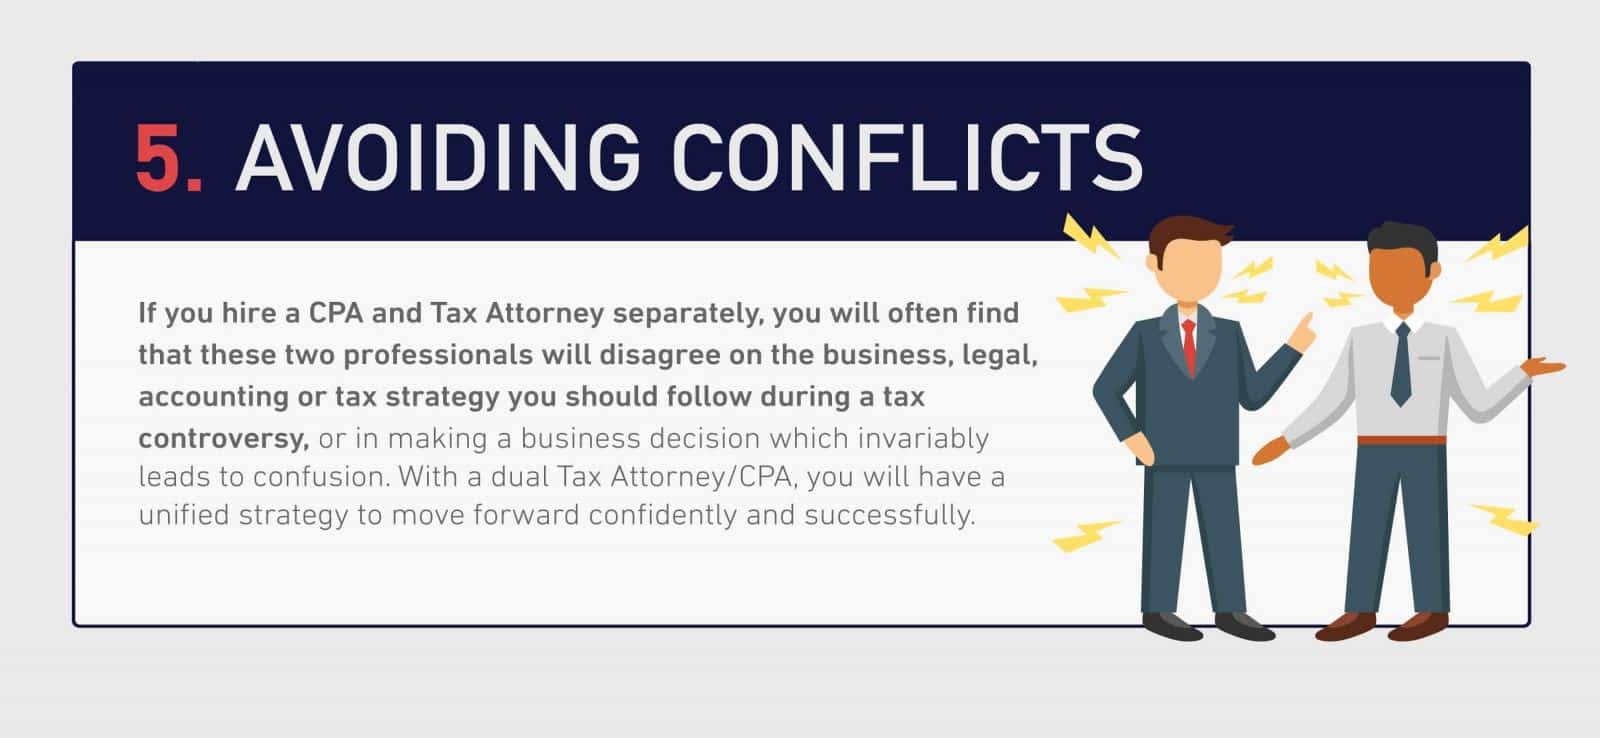 Avoiding-conflicts-klasing-associates-orange-county-tax-attorney